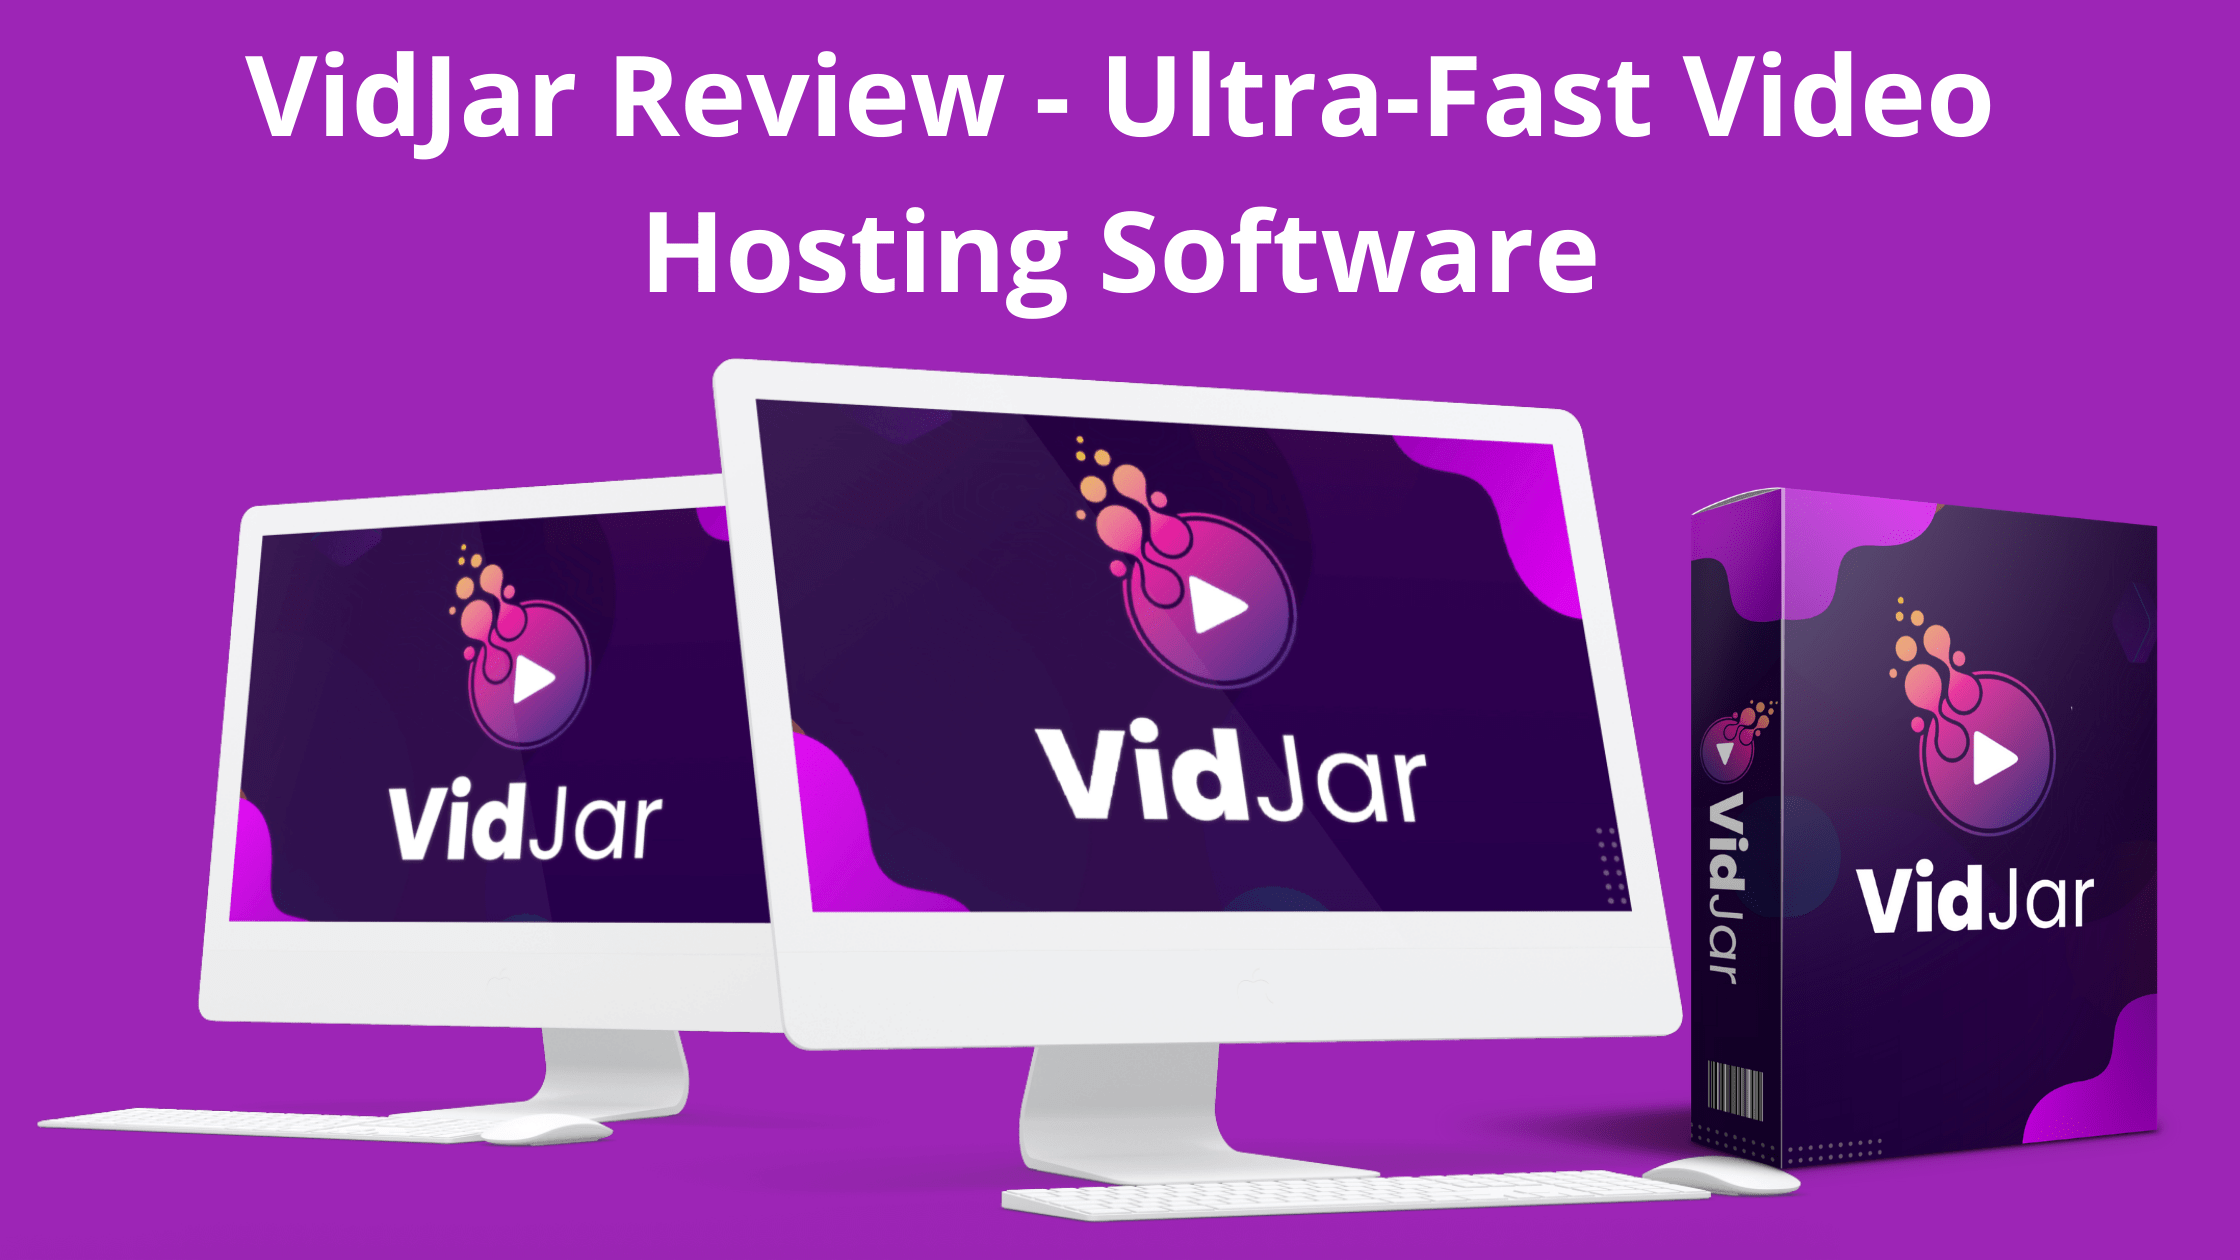 VidJar Review - Ultra-Fast, video Hosting Software.